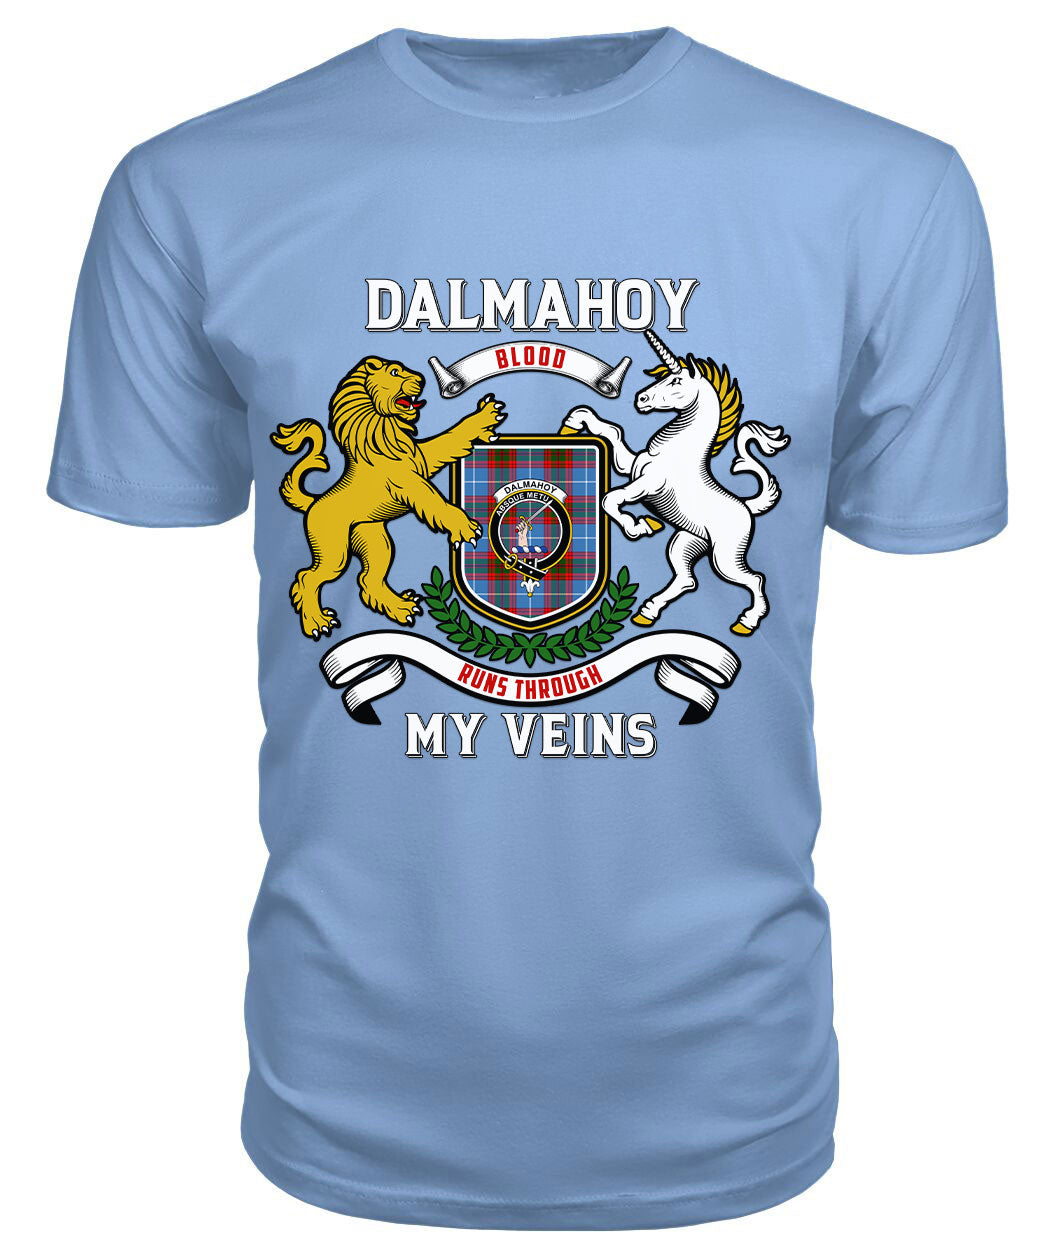 Dalmahoy Tartan Crest 2D T-shirt - Blood Runs Through My Veins Style